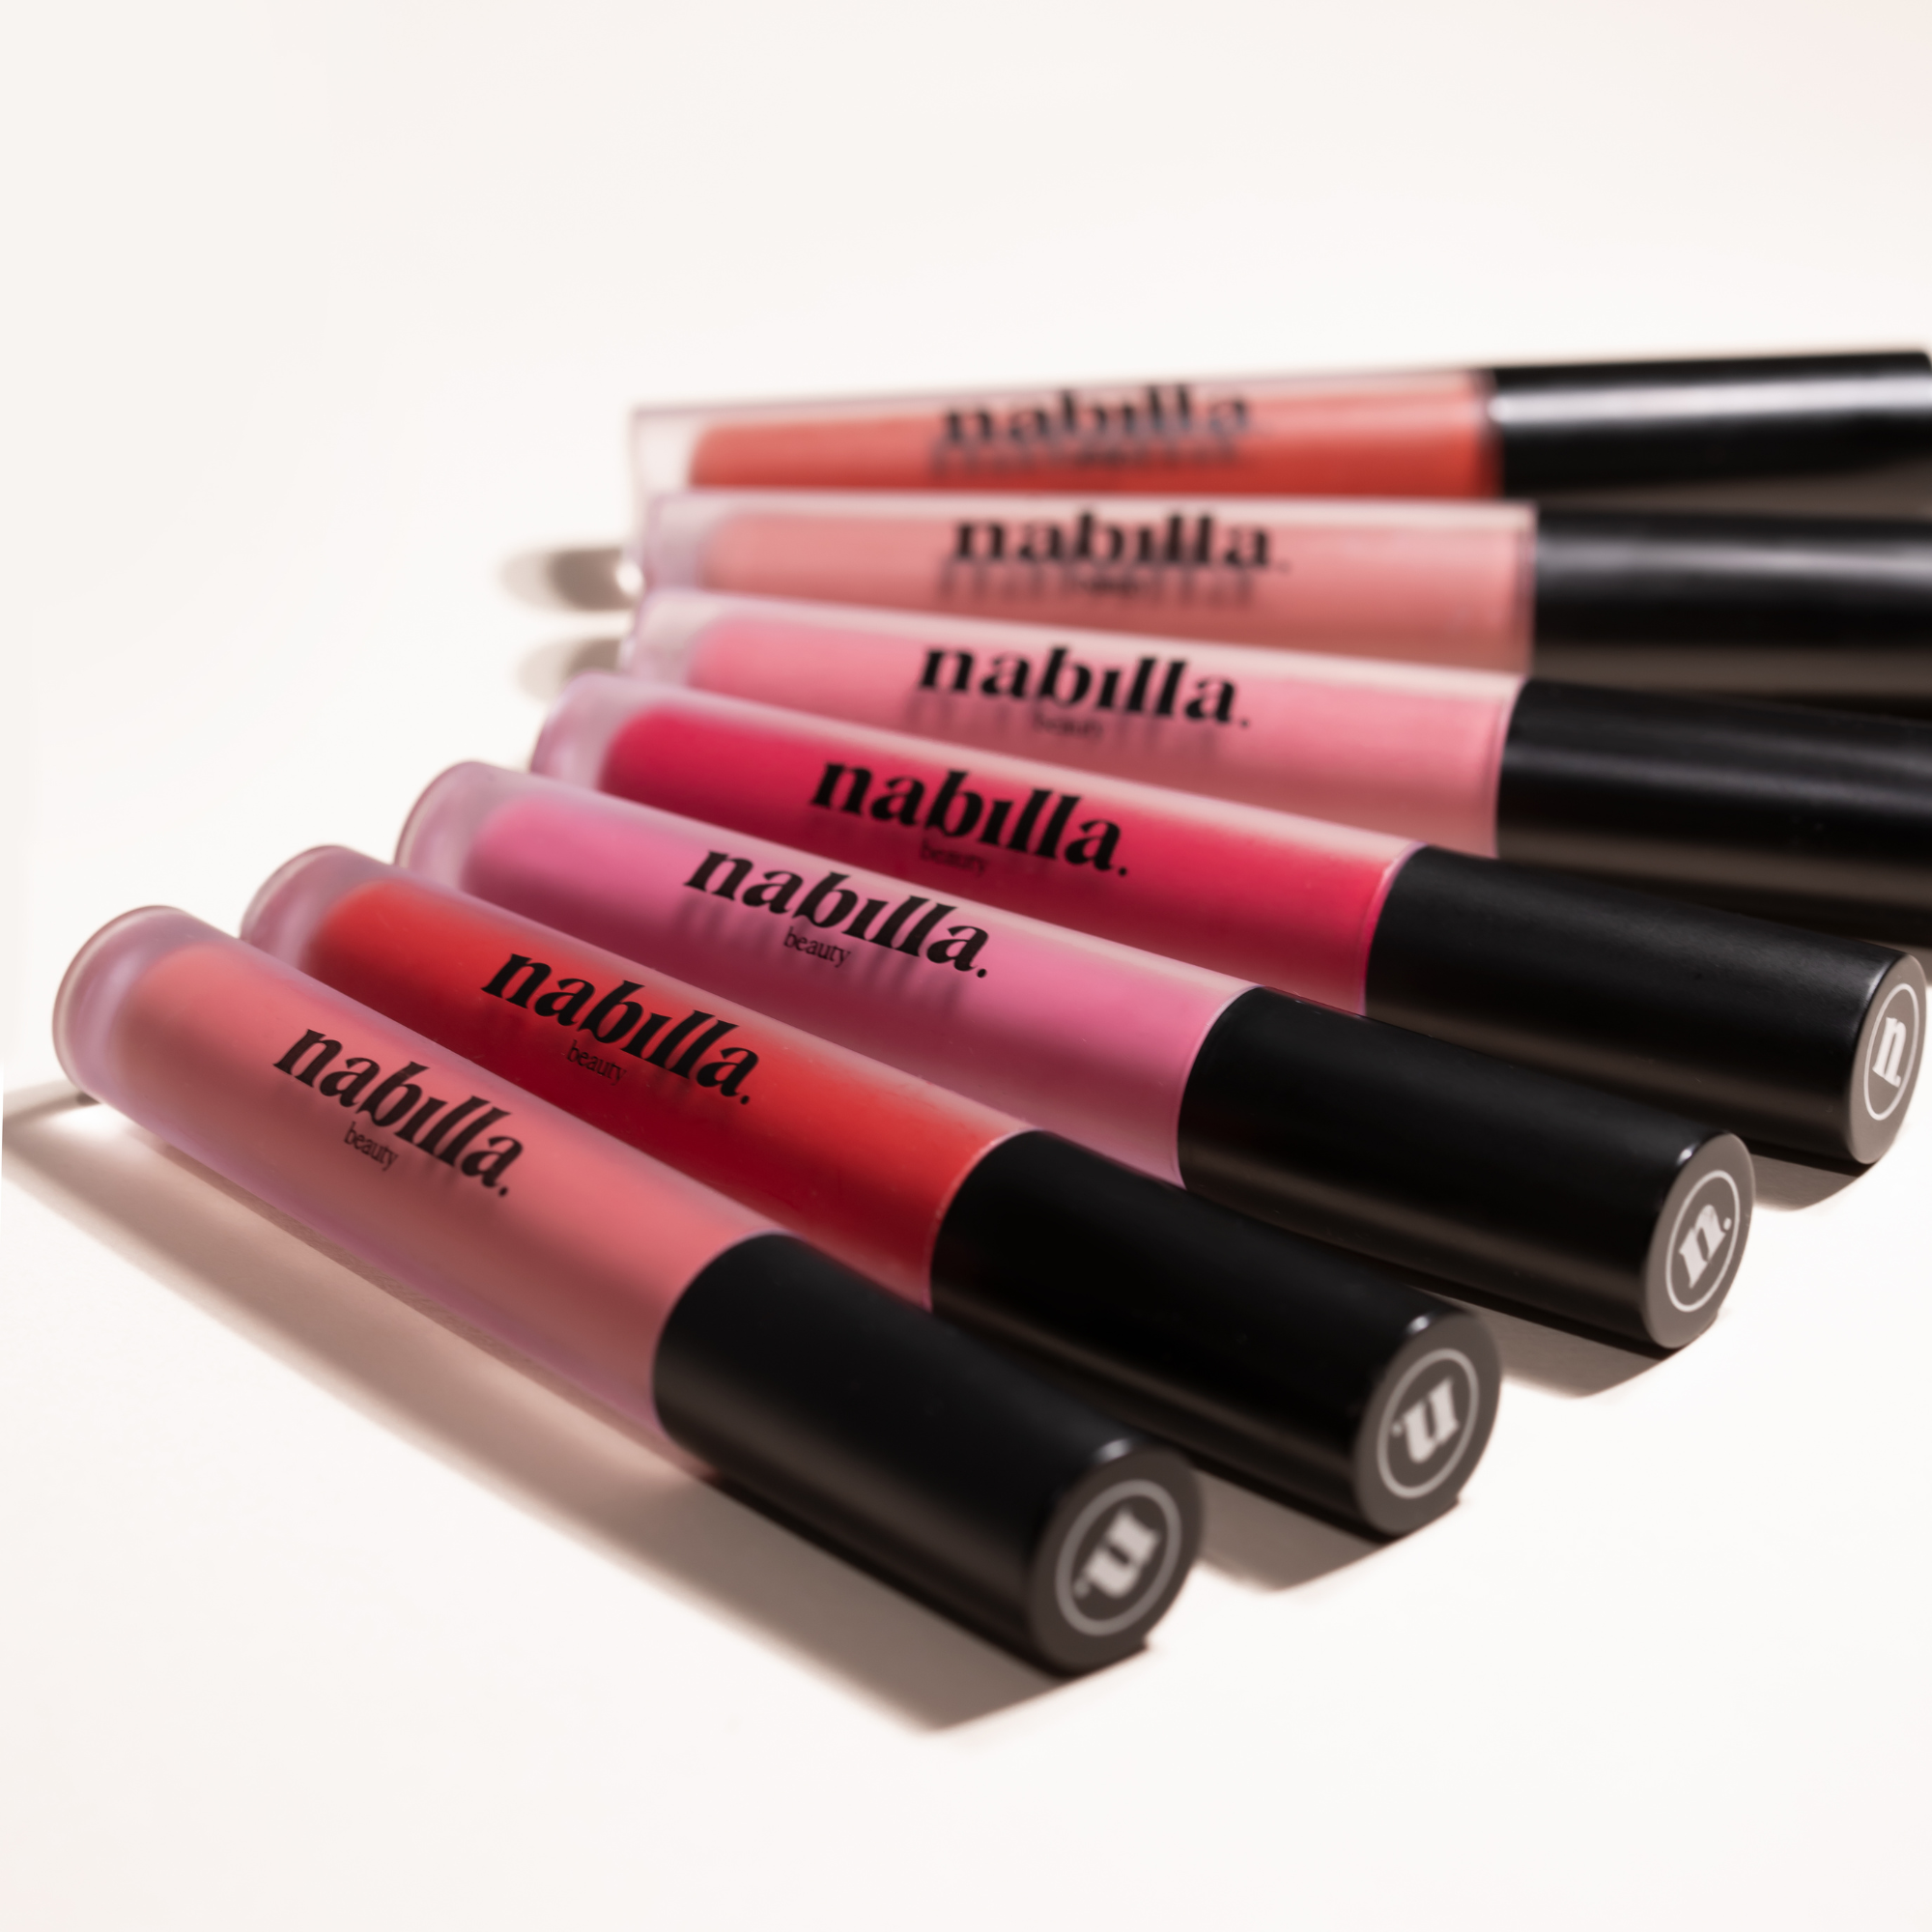  Matte lipsticks 3 purchased + 1 free